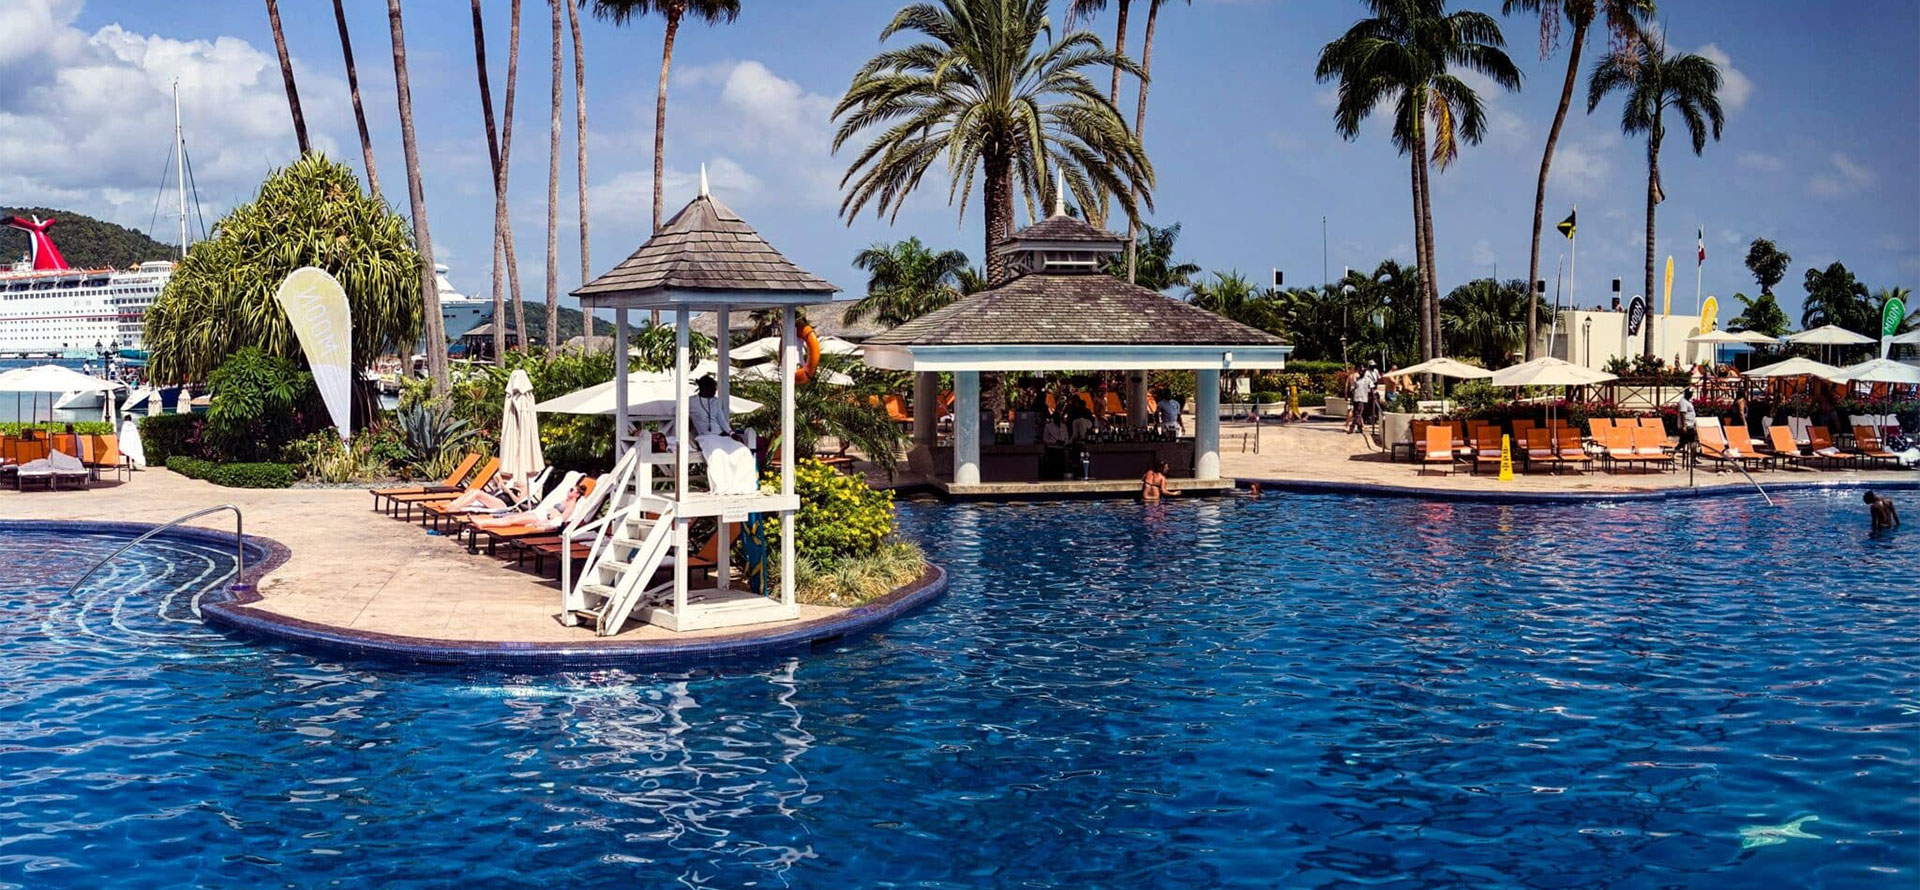 Puerto rico honeymoon resort with pool.